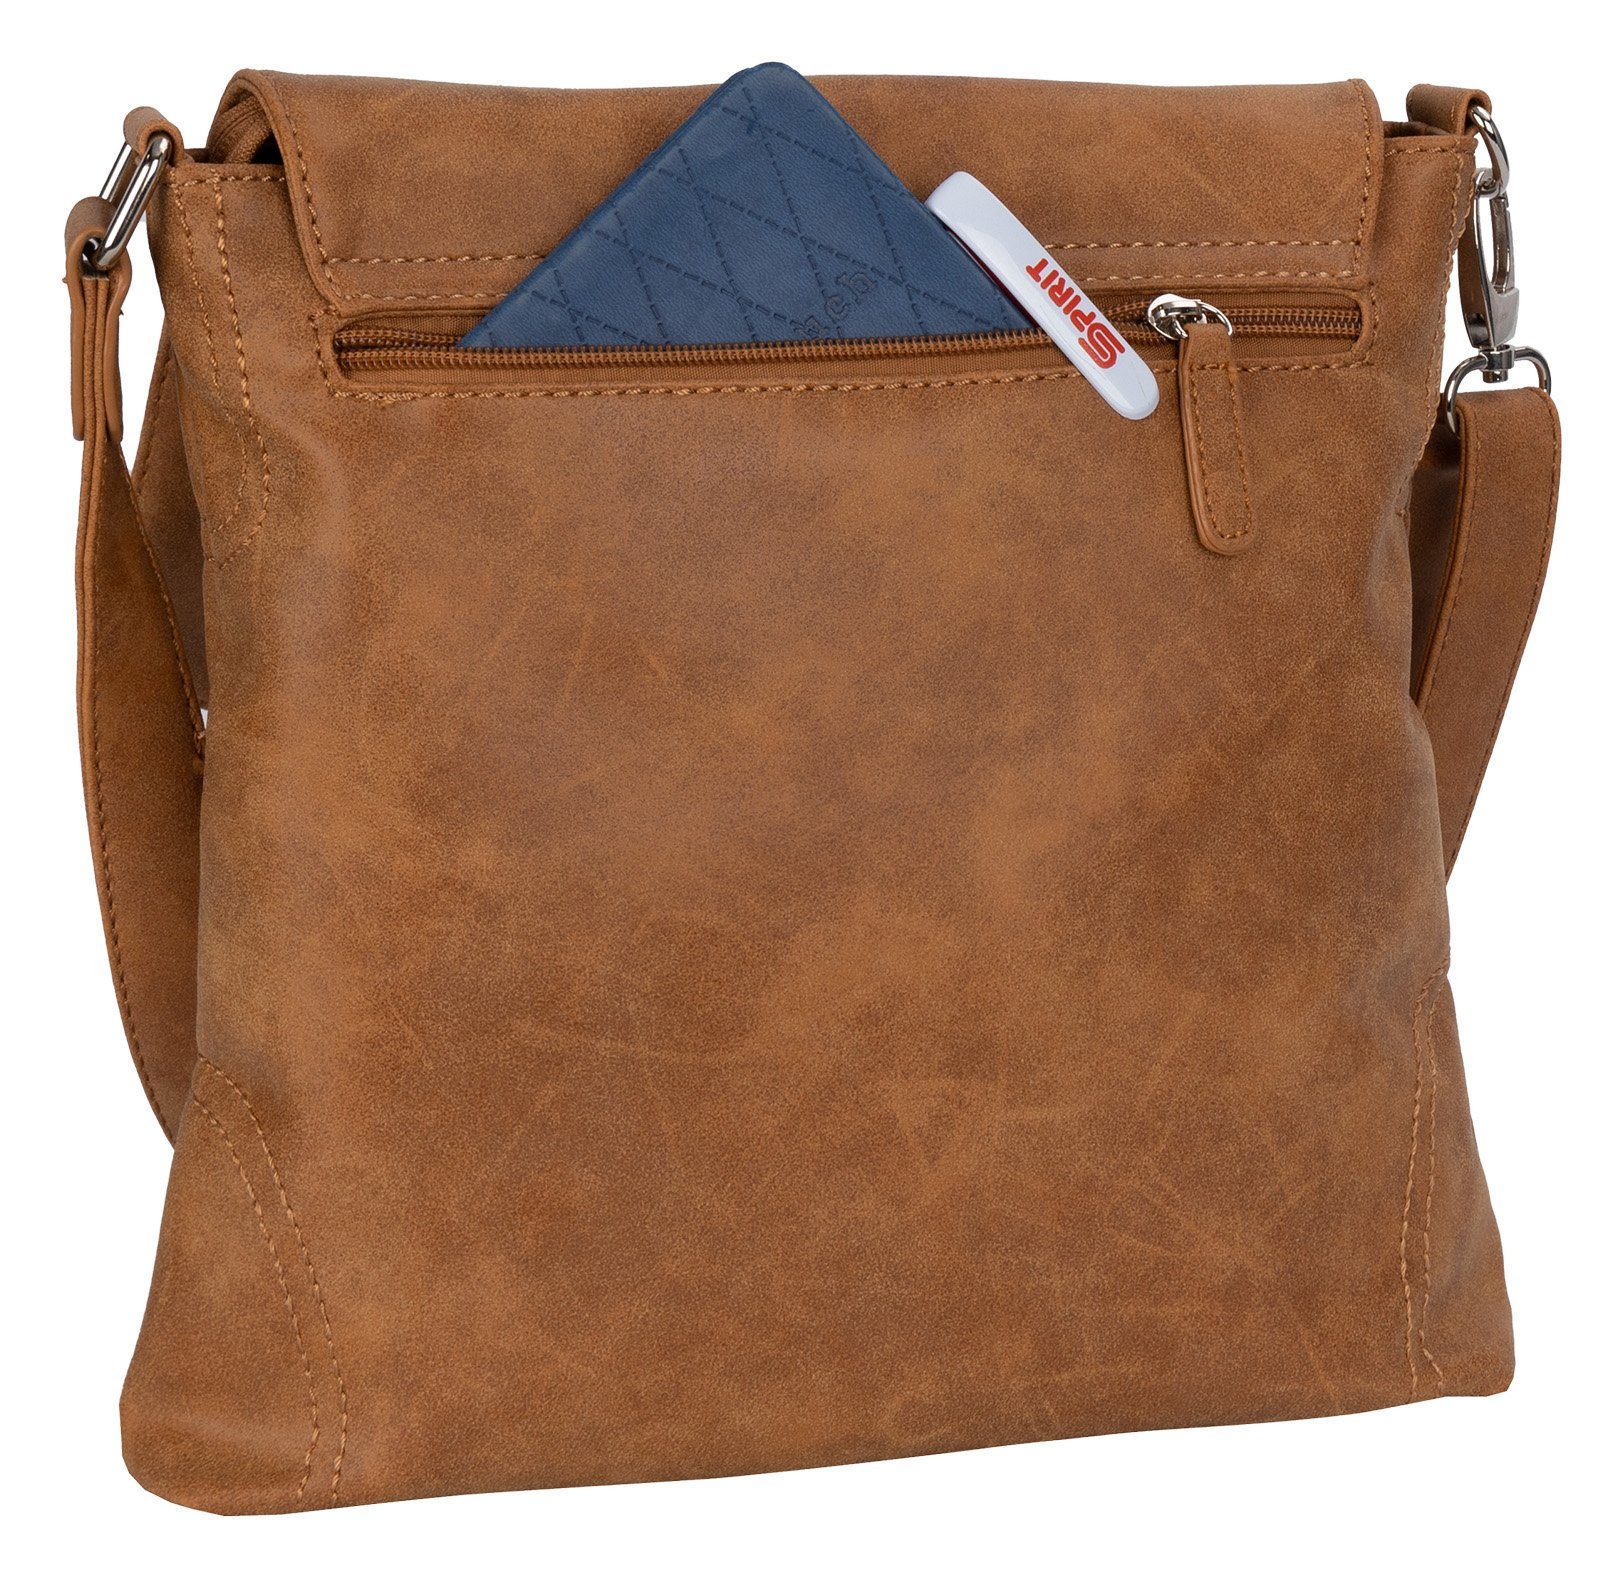 Damentasche Street als Bag COGNAC T0104, Handtasche BAG Schlüsseltasche Schultertasche STREET Schultertasche, tragbar Umhängetasche Umhängetasche